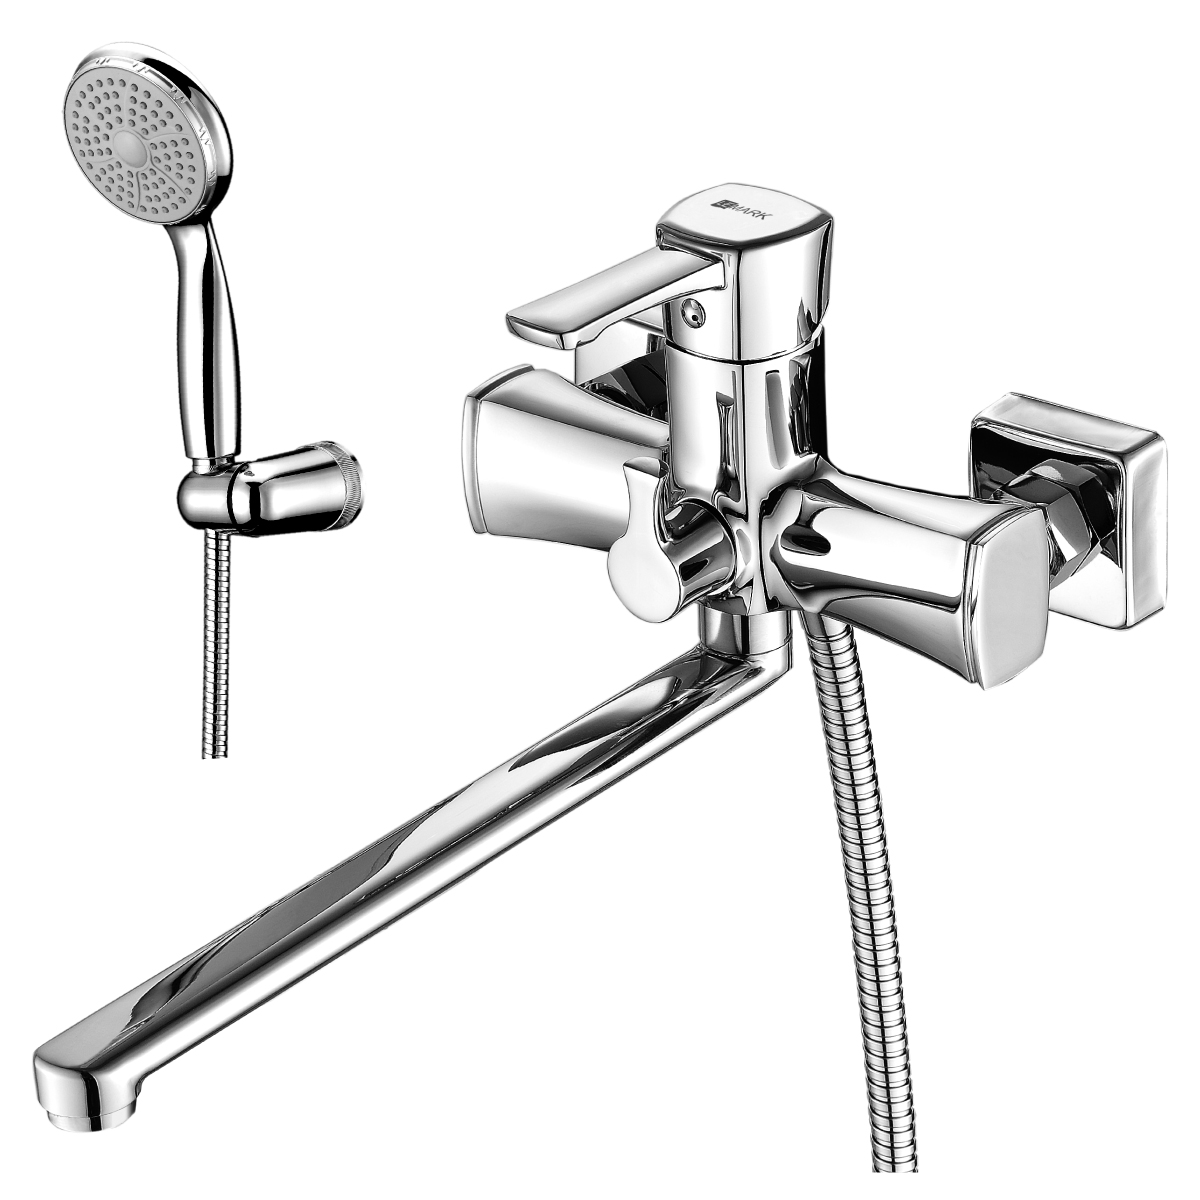 LM0551C Washbasin/bath faucet
with 300 mm flat swivel spout